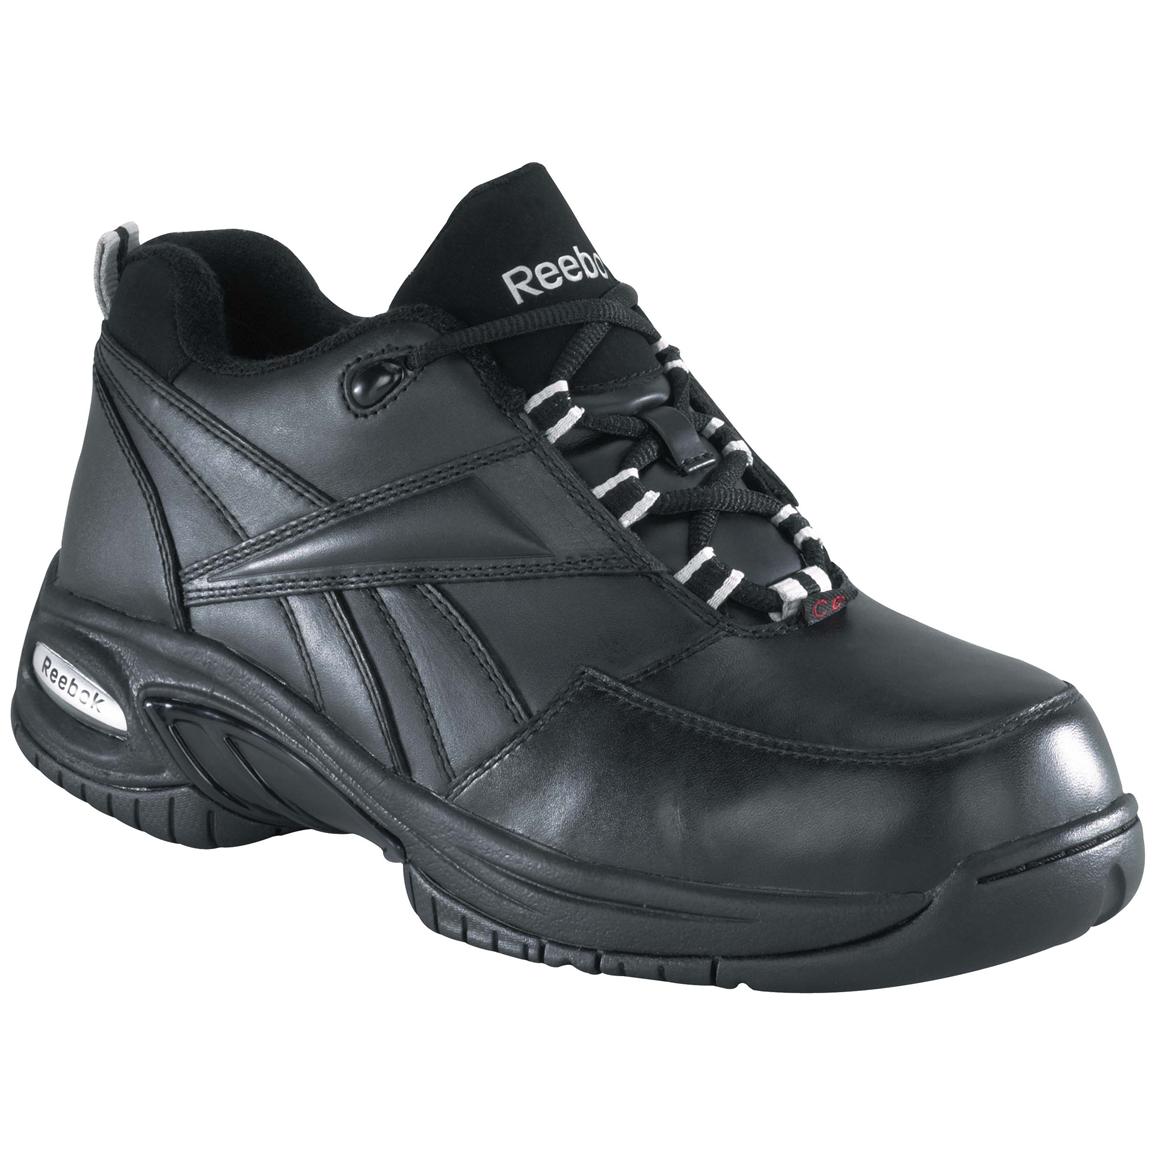 Women's Reebok® High Performance Athletic Shoes, Black - 231918 ...